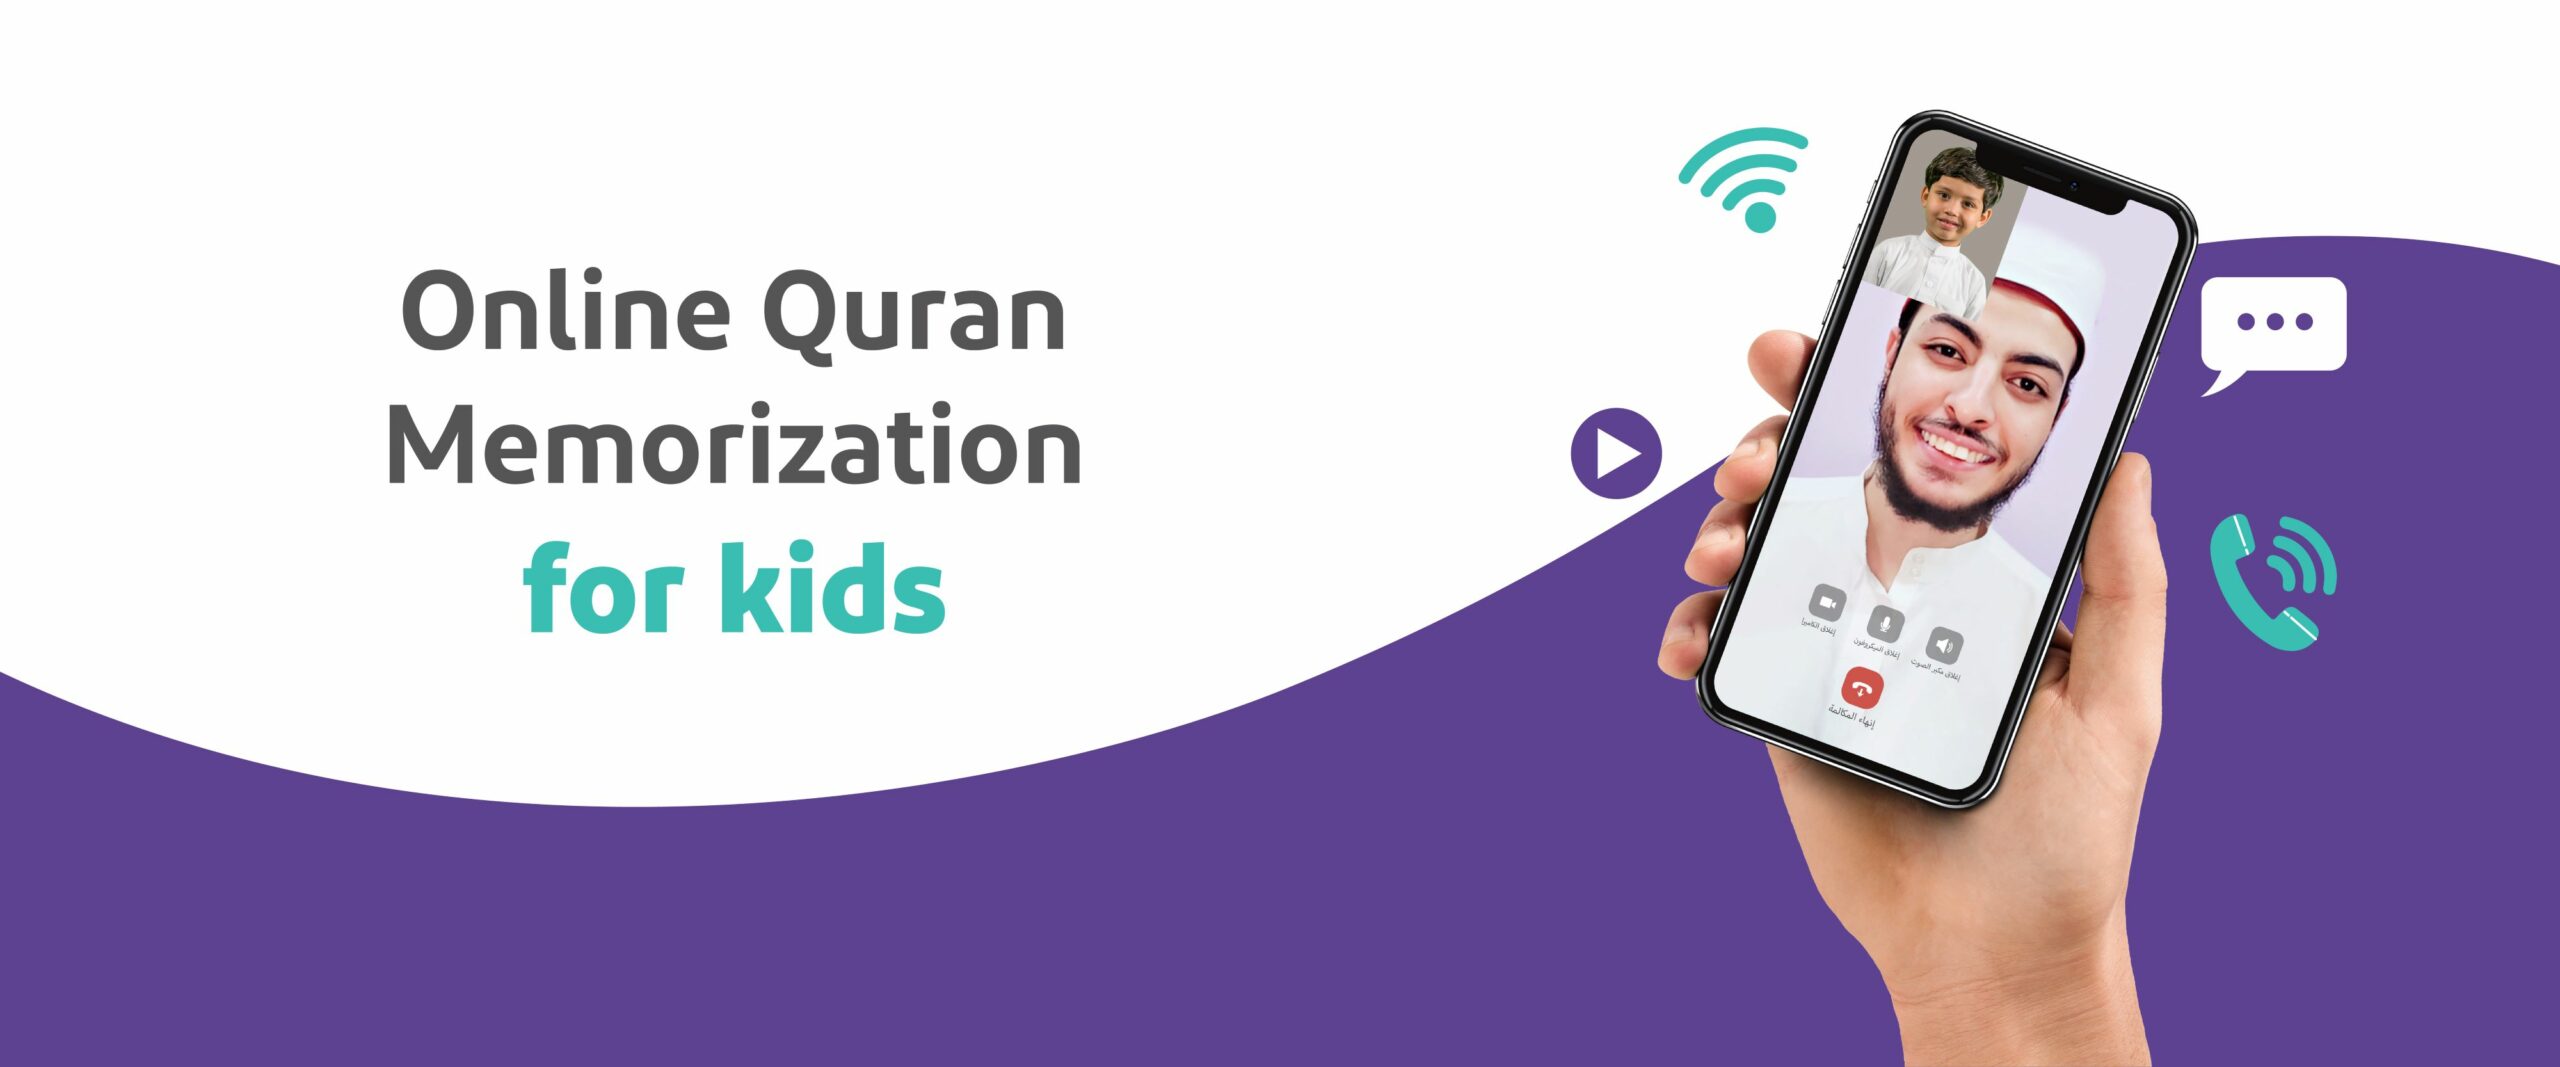 Online Quran memorization for kids